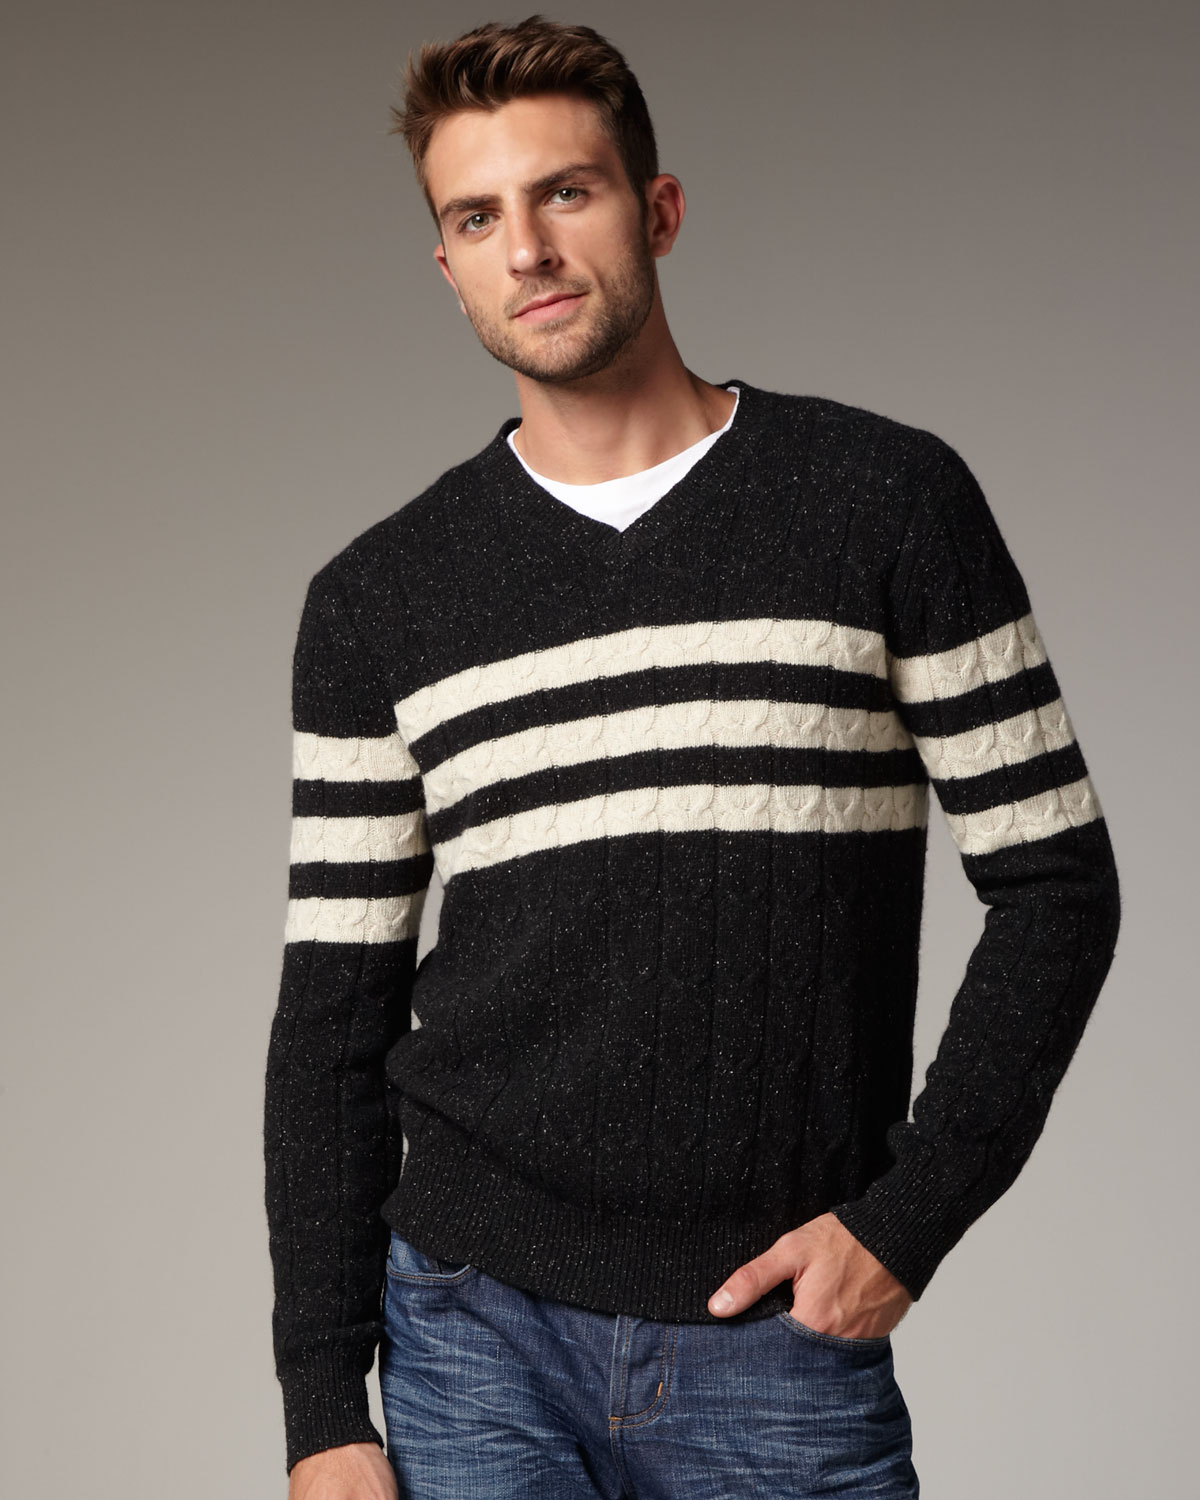 vince-black-striped-v-neck-sweater-product-1-2313912-379371960.jpeg